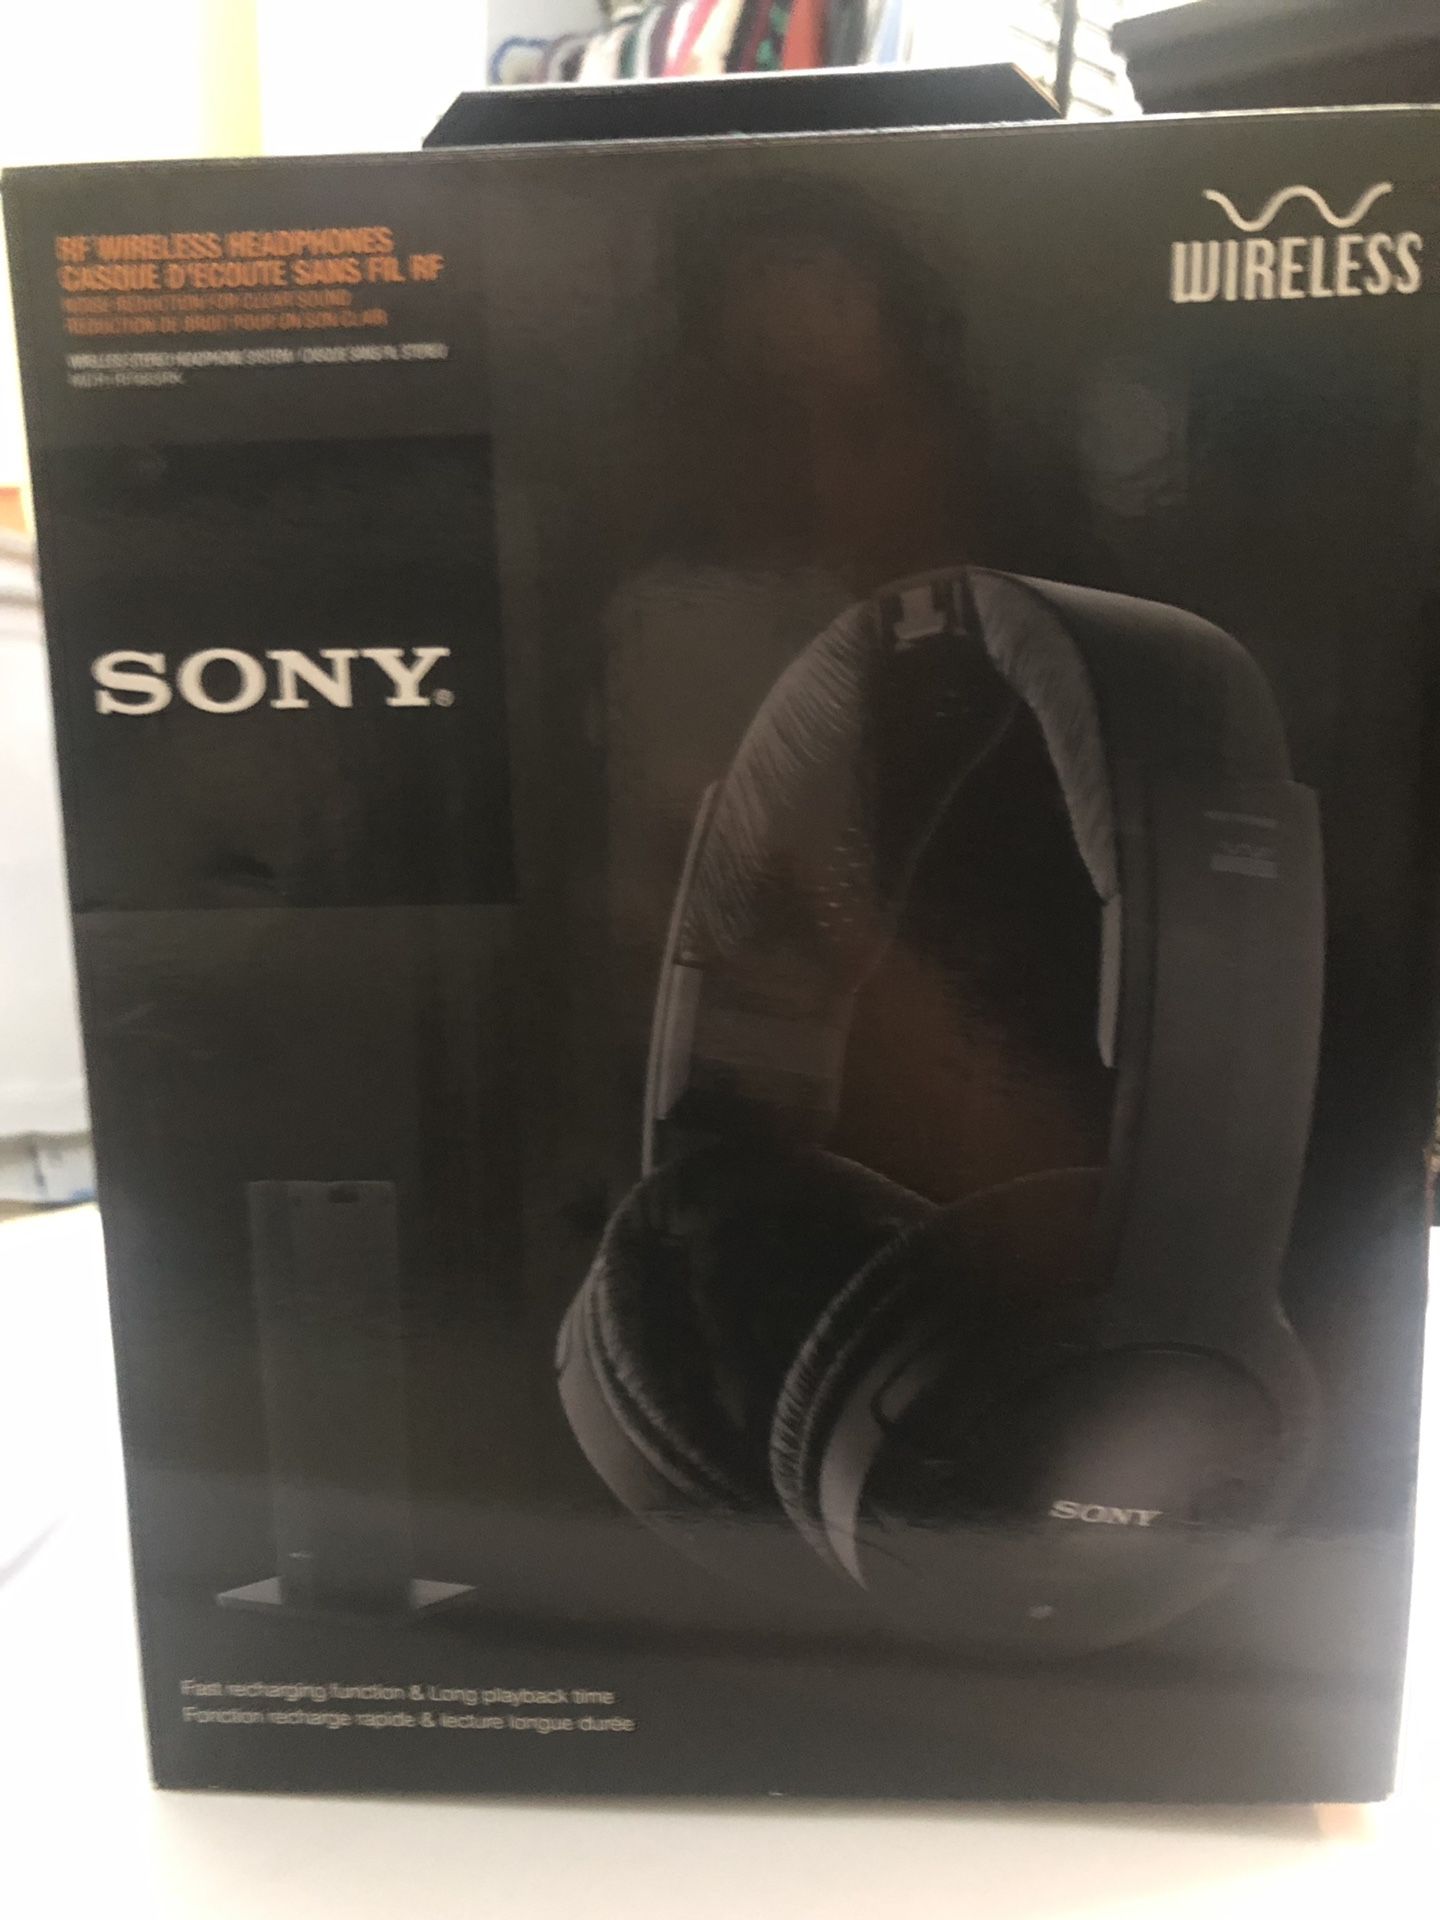 Sony noise cancelling headphones.